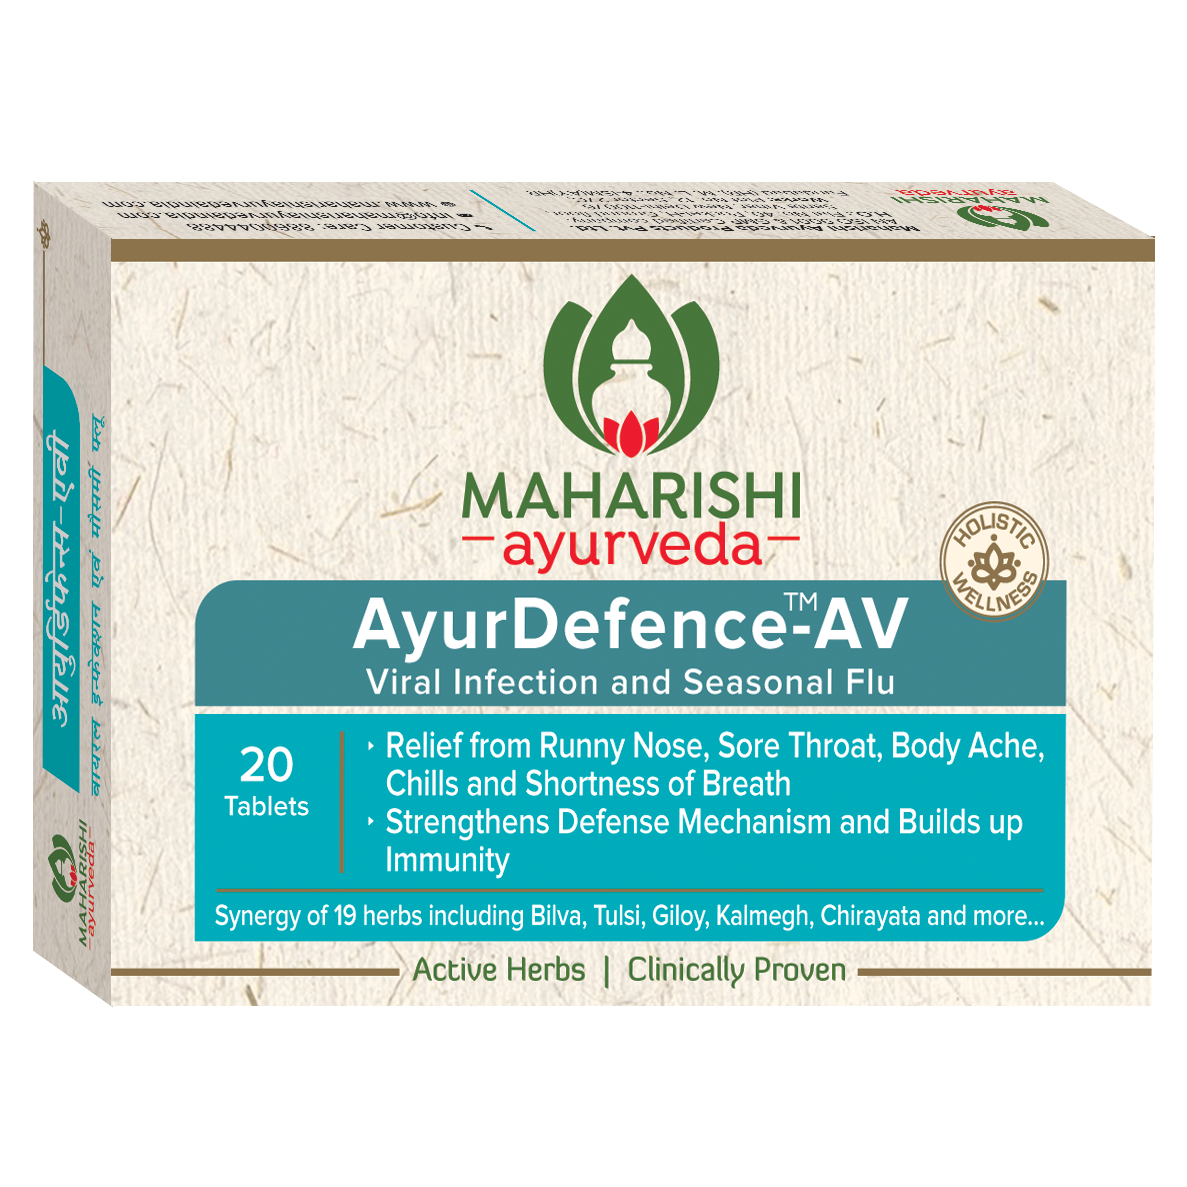 Shop Ayurdefence AV - 10Tablets at price 135.00 from Maharishi Ayurveda Online - Ayush Care